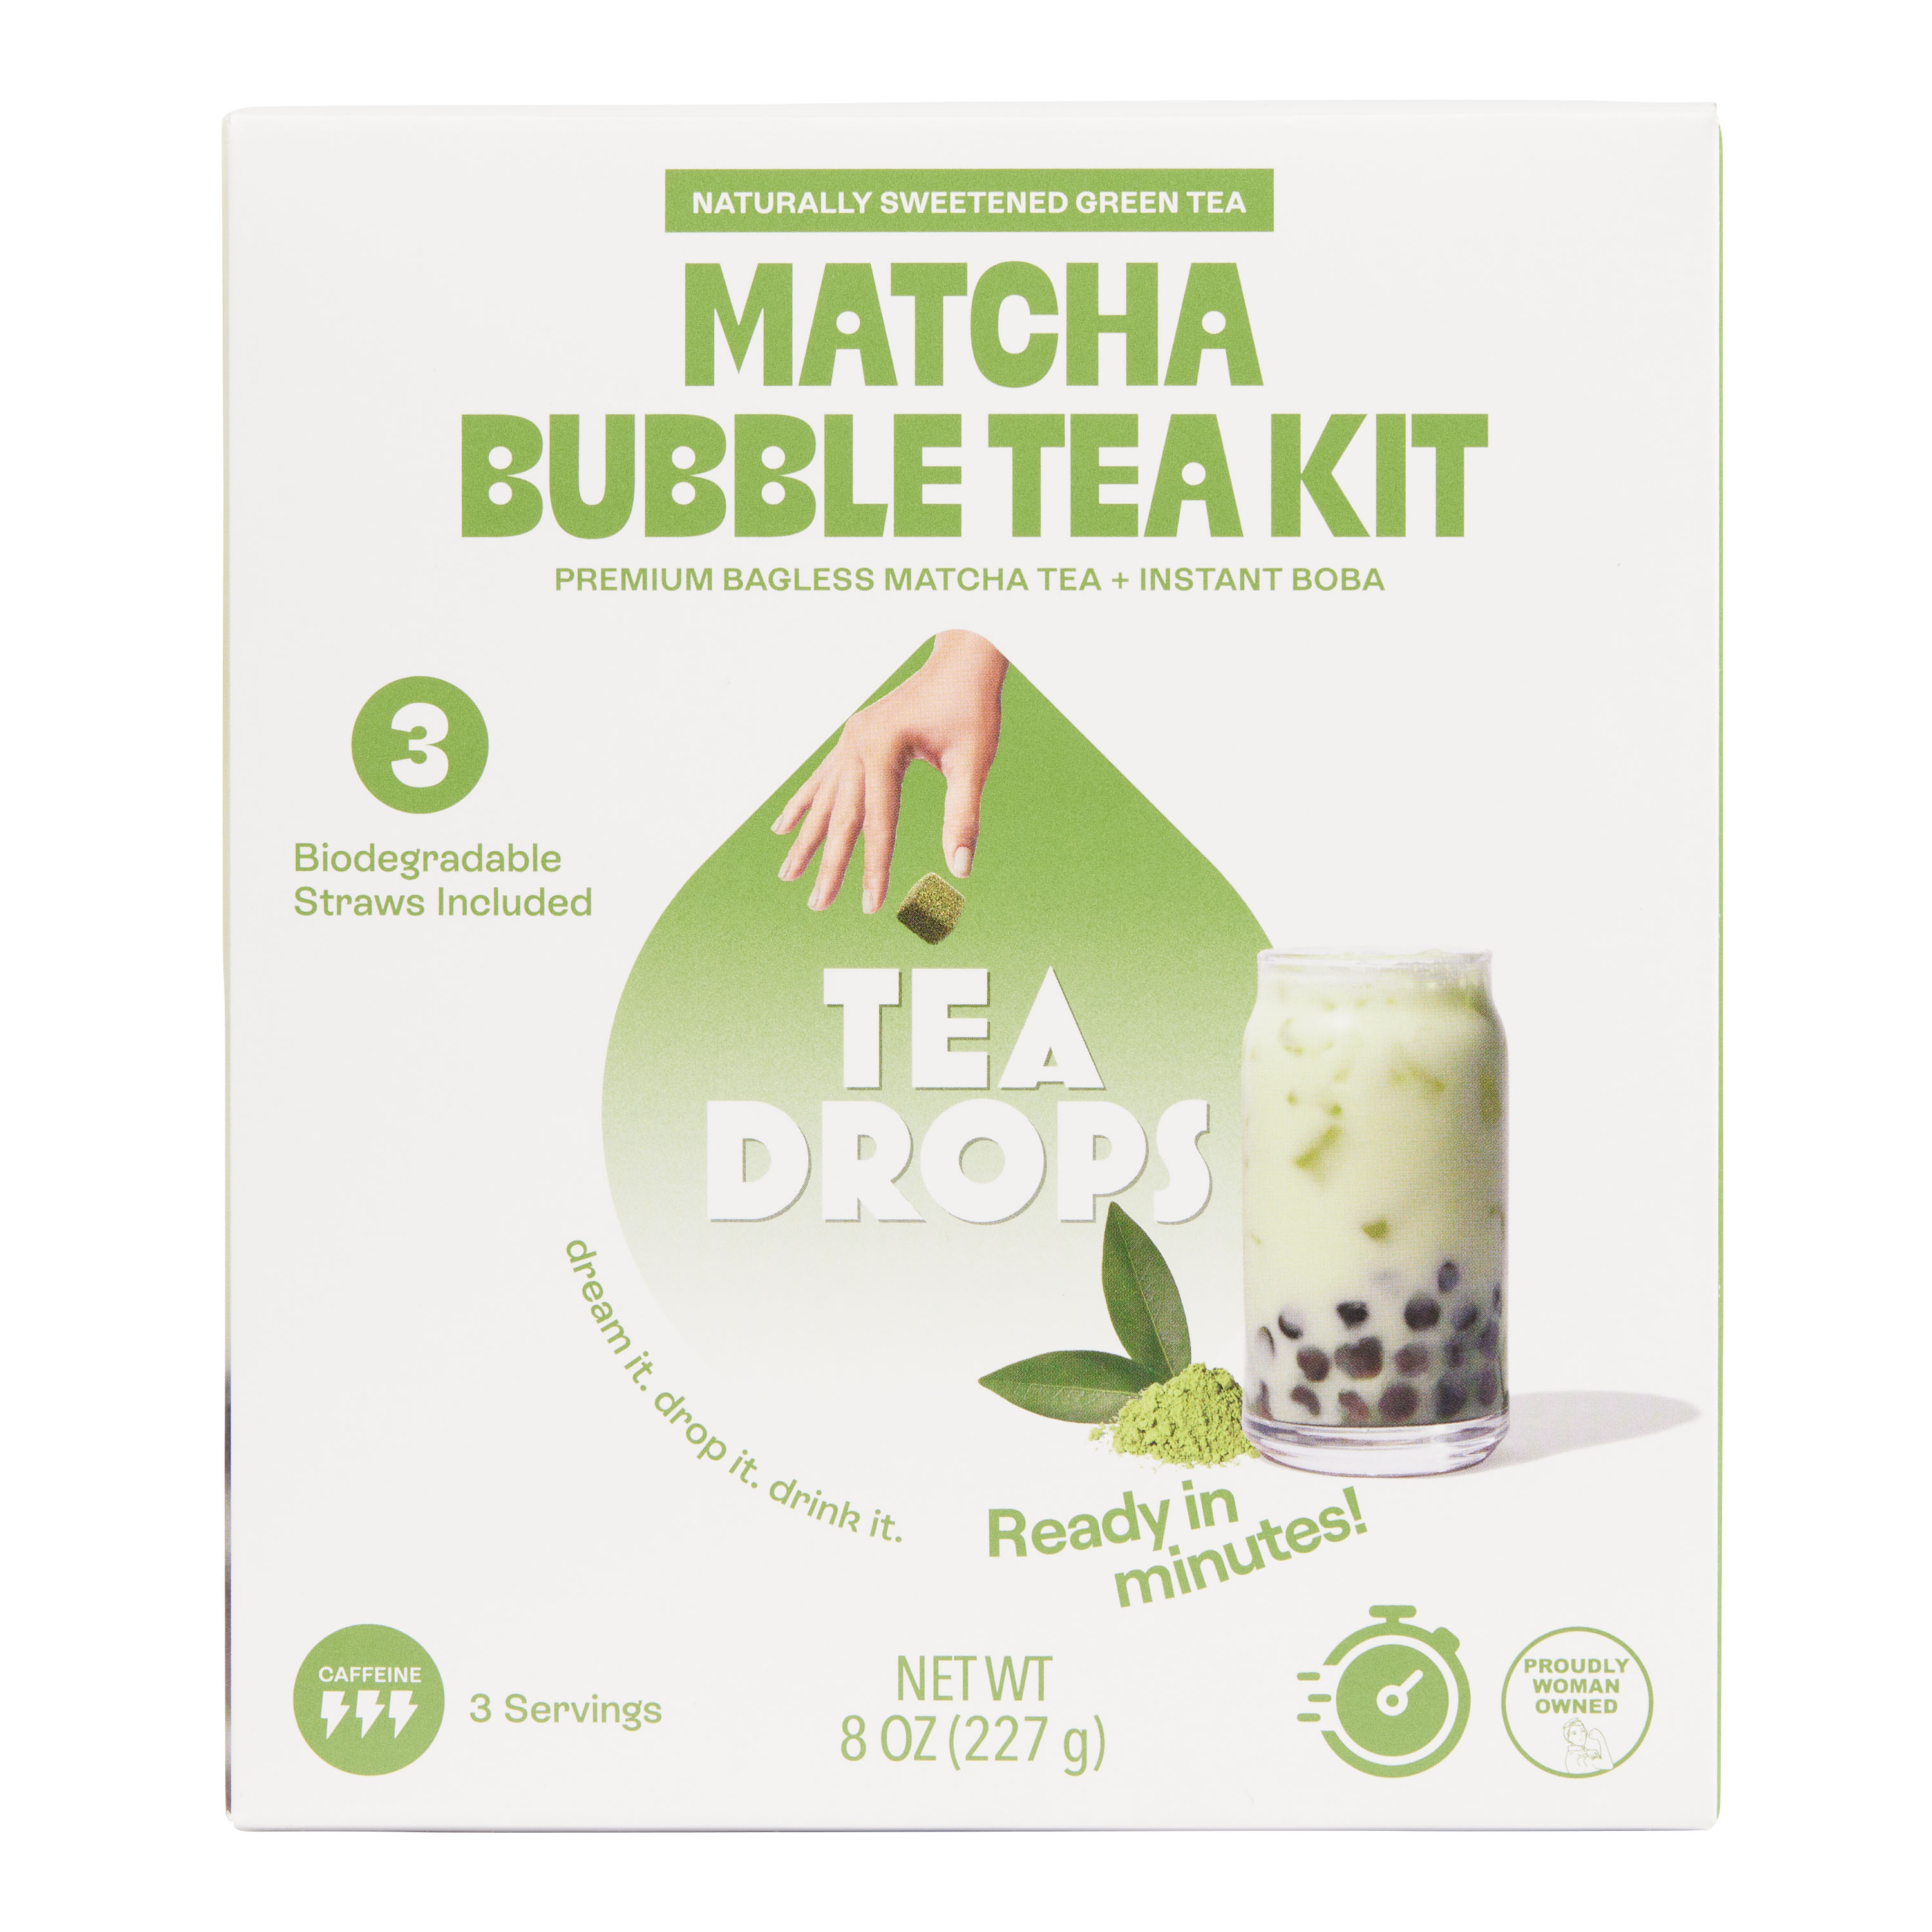 Buy Matcha Picnic Set Teaware Tea Sets - Sazen Tea